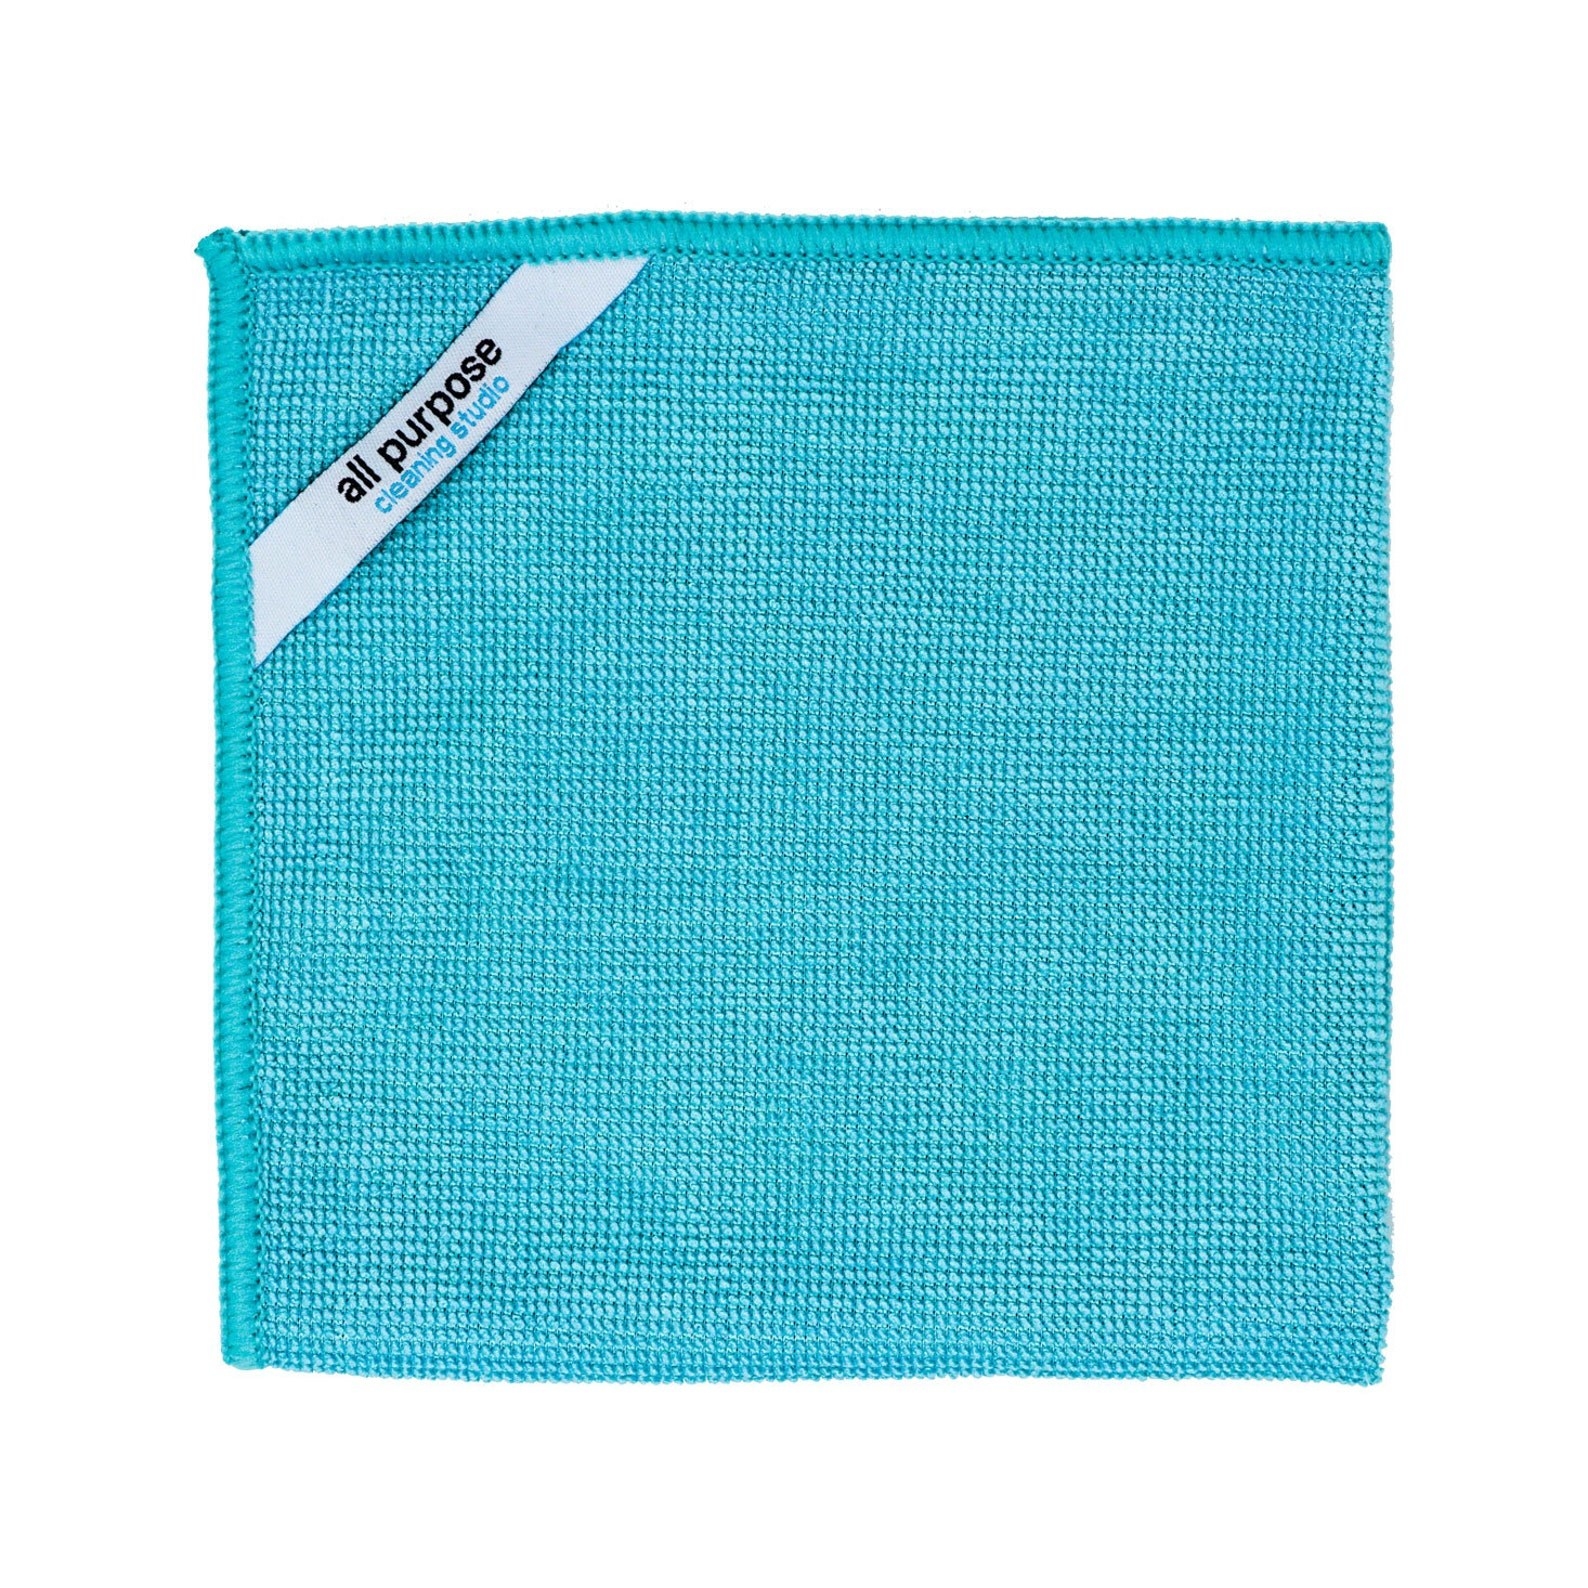 blue microfiber cloth folded up into a square